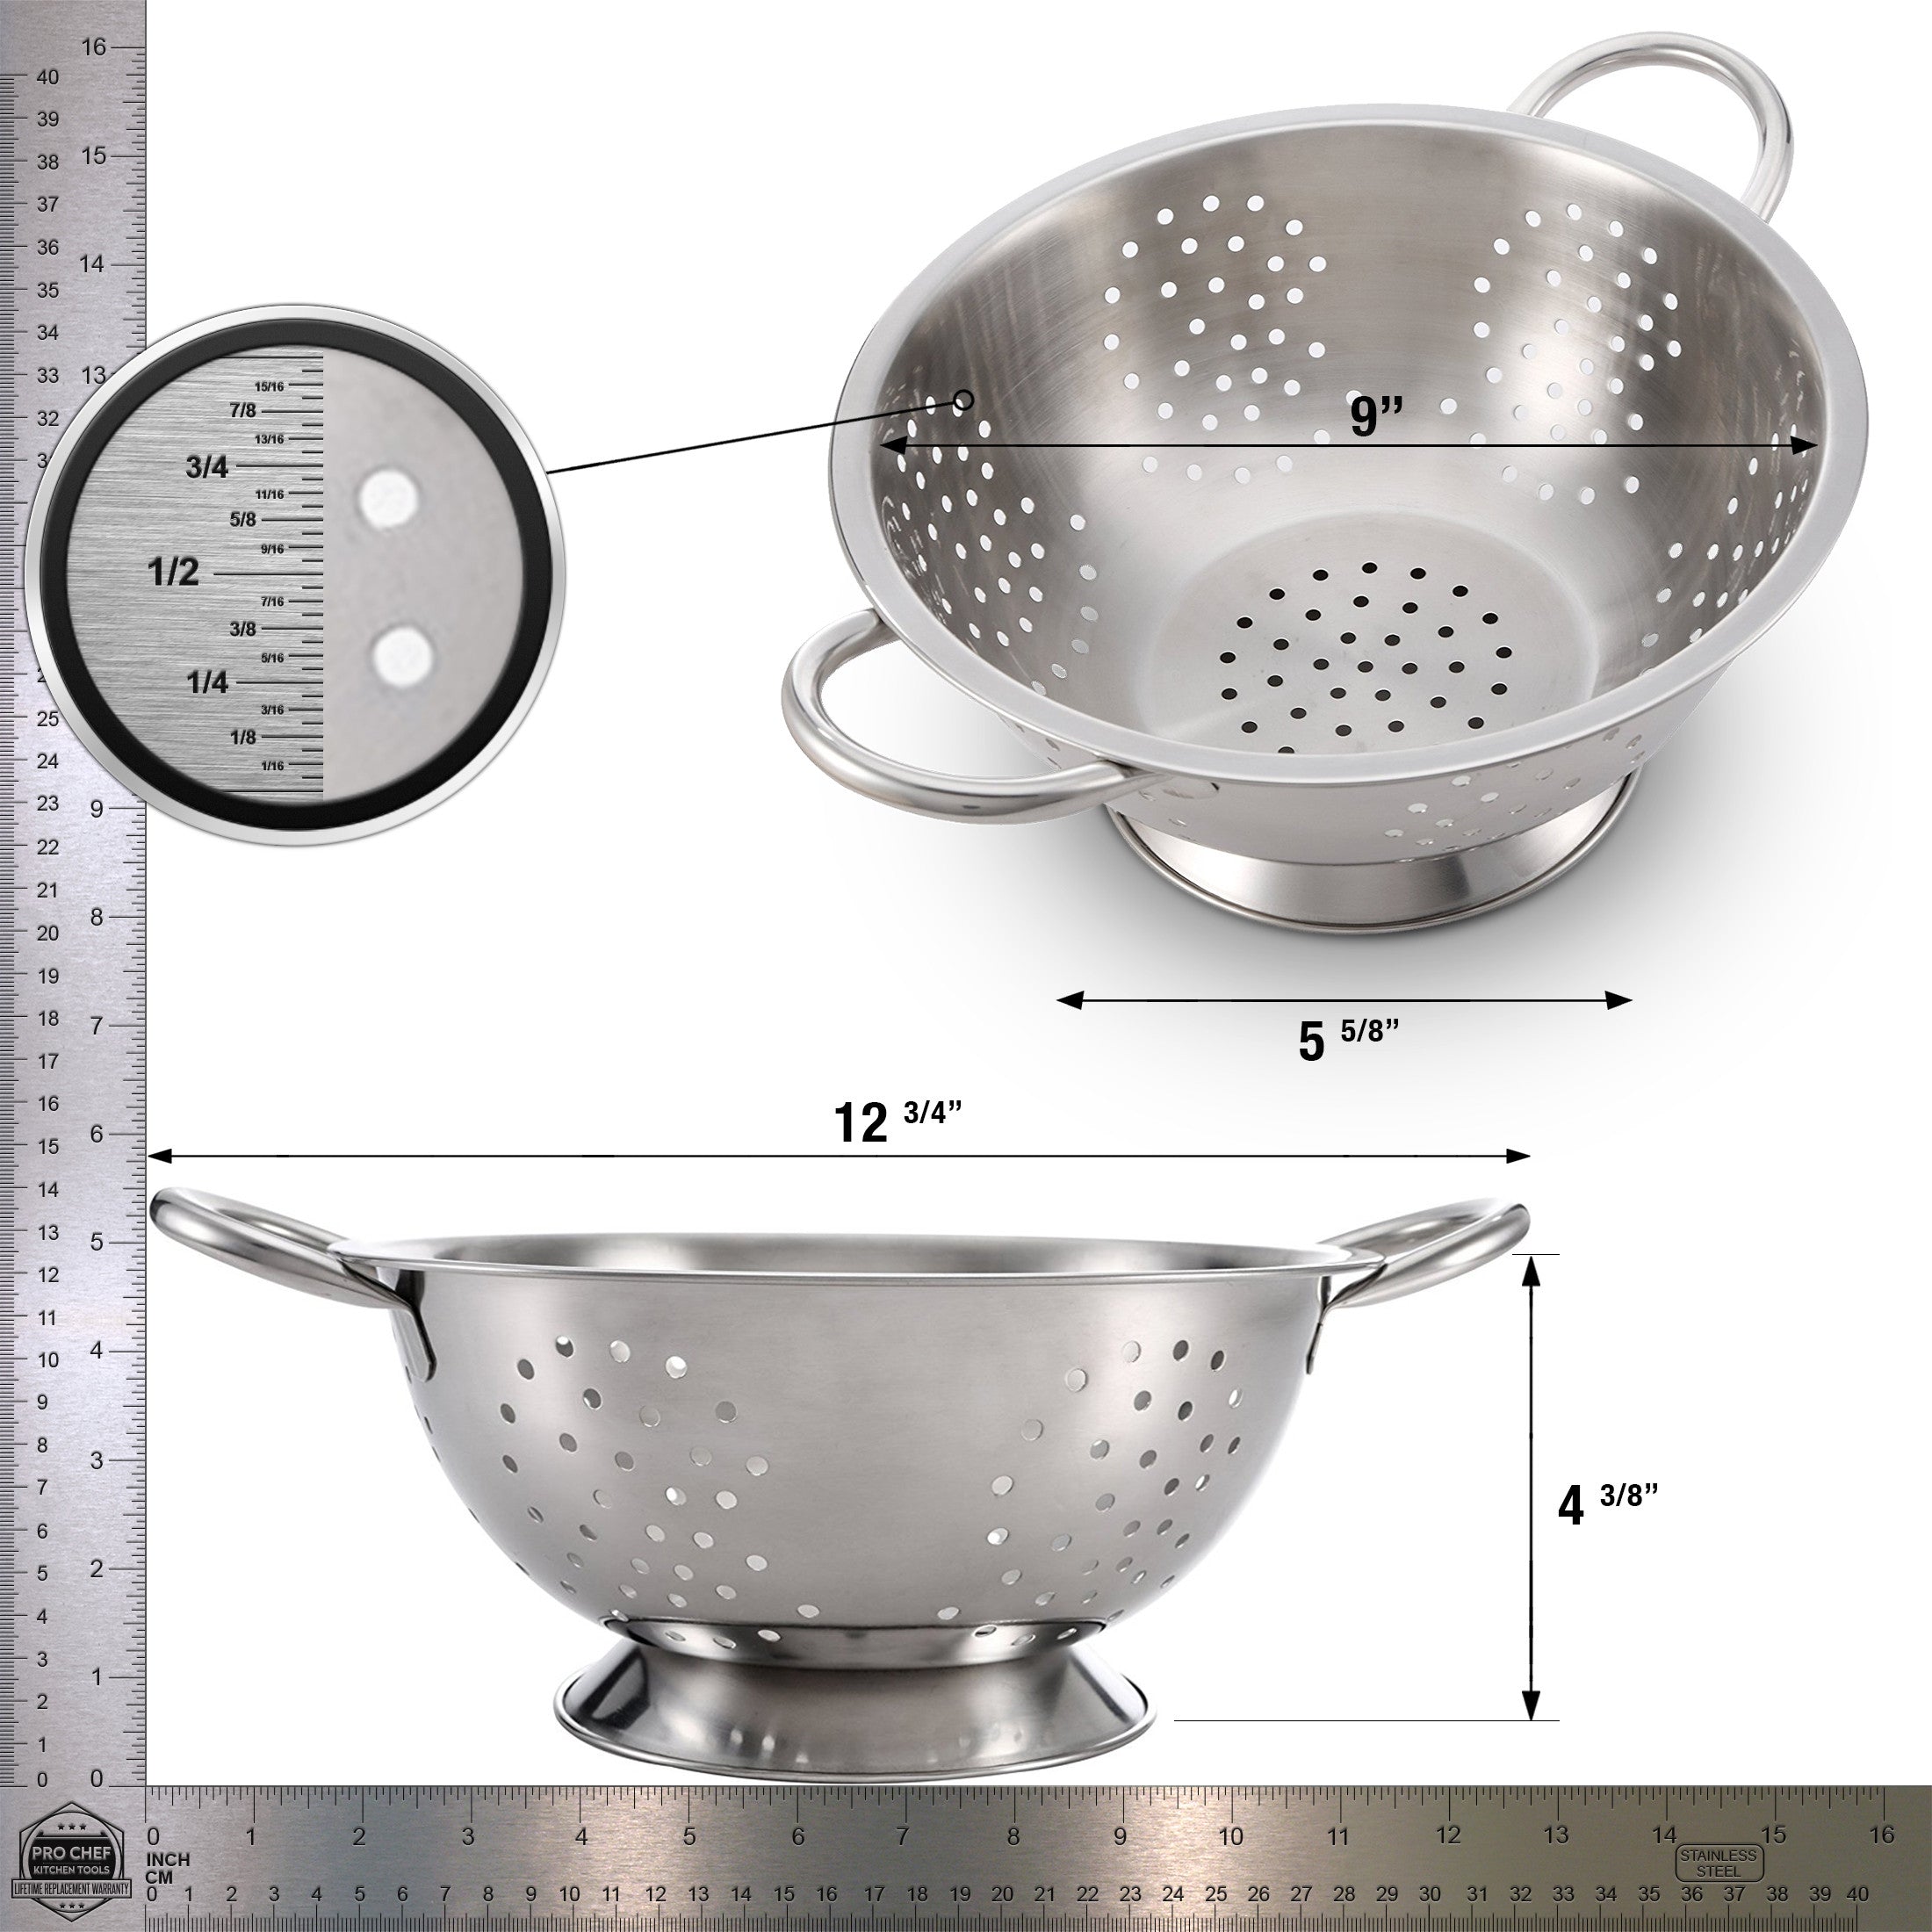 Kitchen Stainless Steel Half-Moon Pan Strainer Pot Drainer Pasta